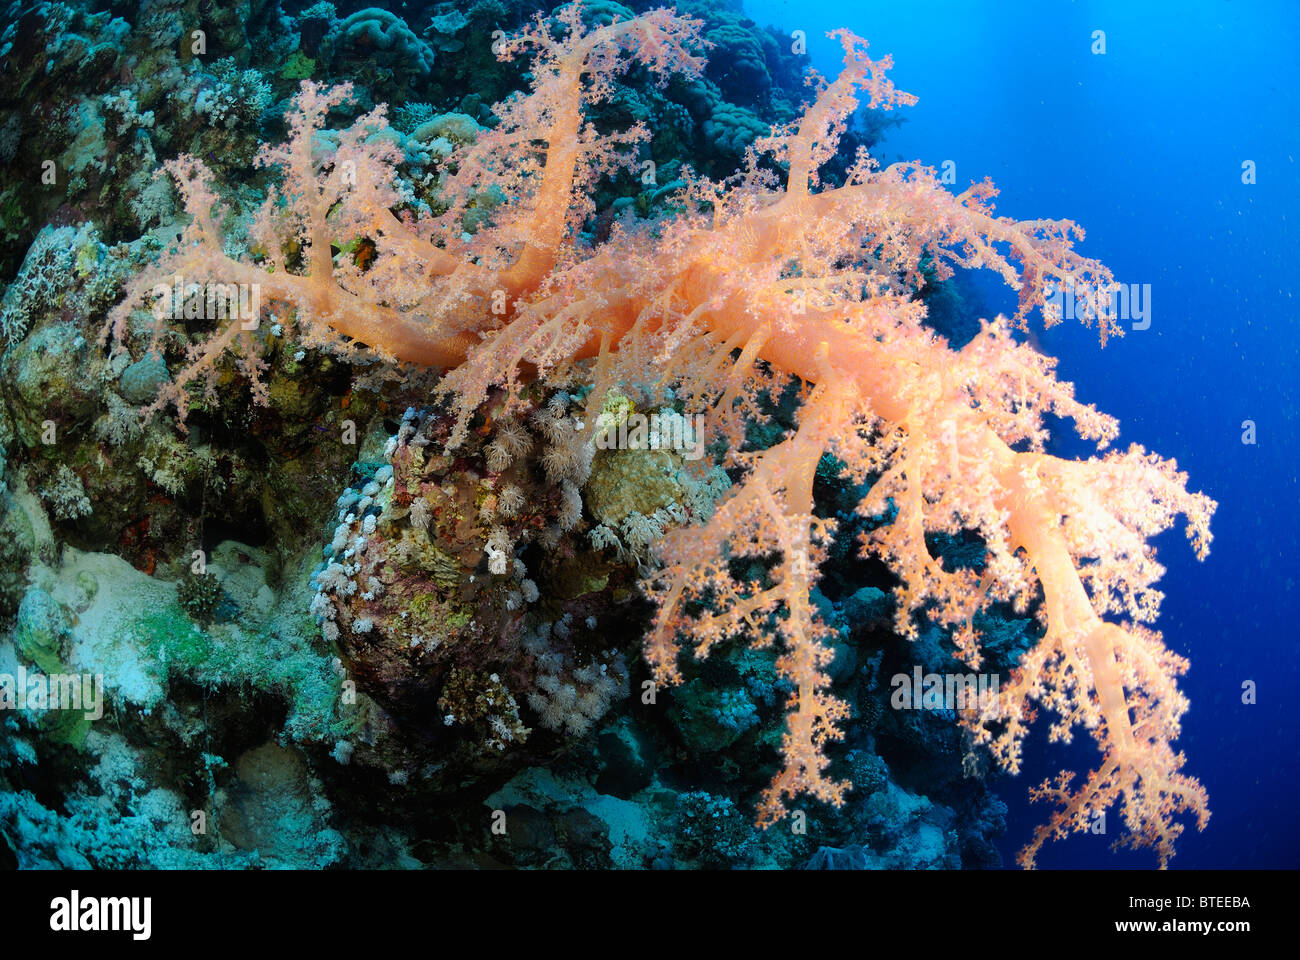 Soft coral colony, Scientific name Dendronephthya sp., off Safaga coast, Red Sea, Egypt, Stock Photo